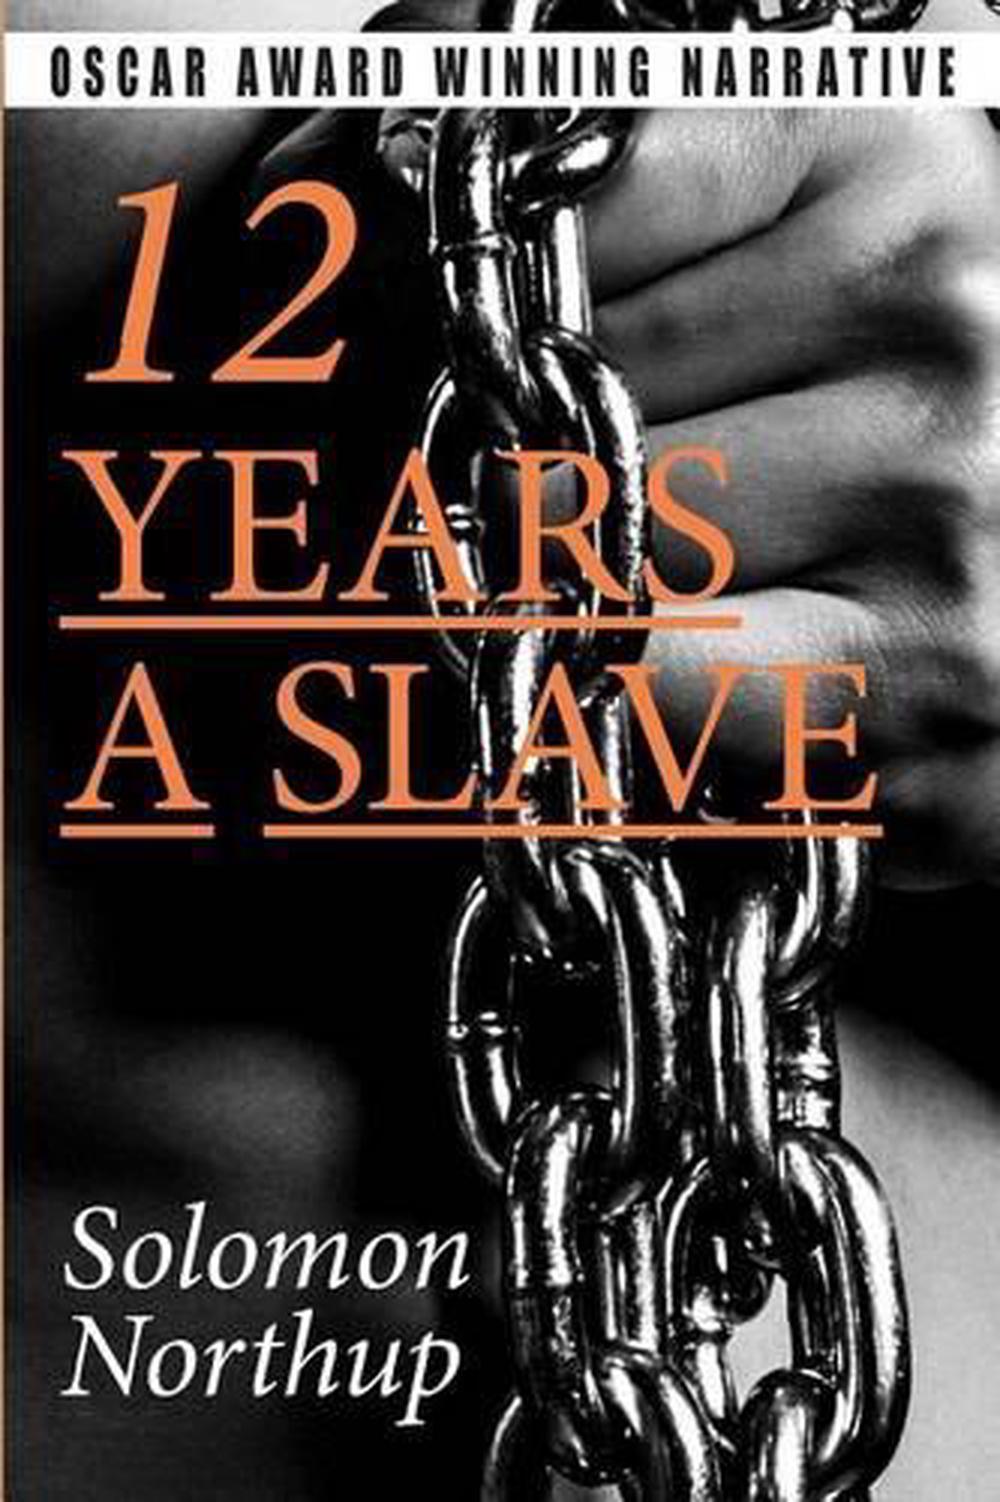 twelve years a slave book